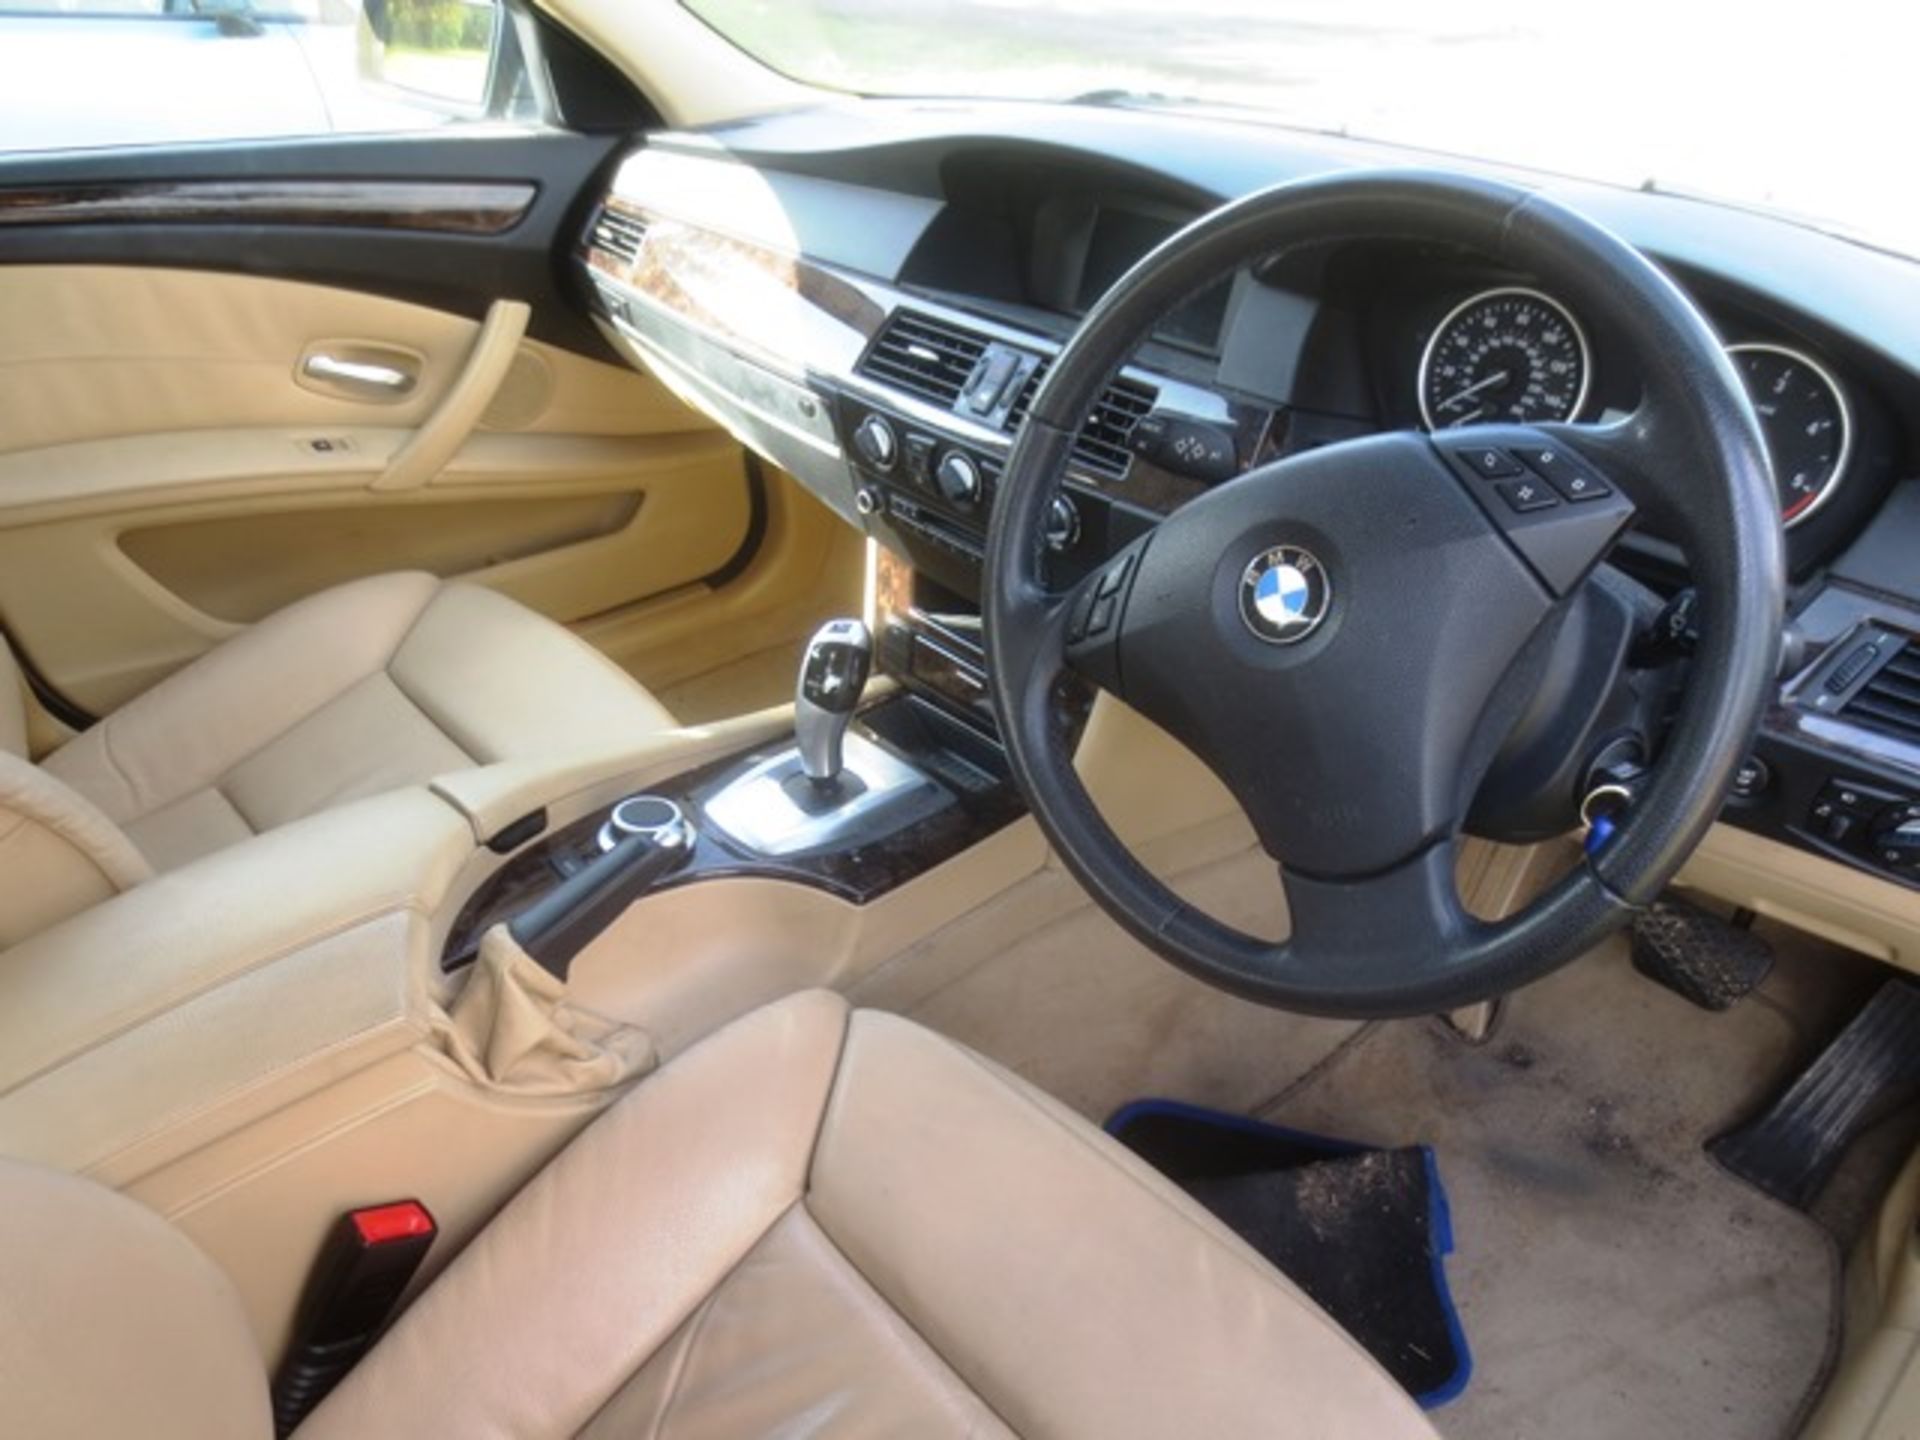 BMW 520D SE auto saloon 1995cc diesel, cream leather interior, reg no: WF57 RUV, mileage: 117,704, - Image 8 of 10